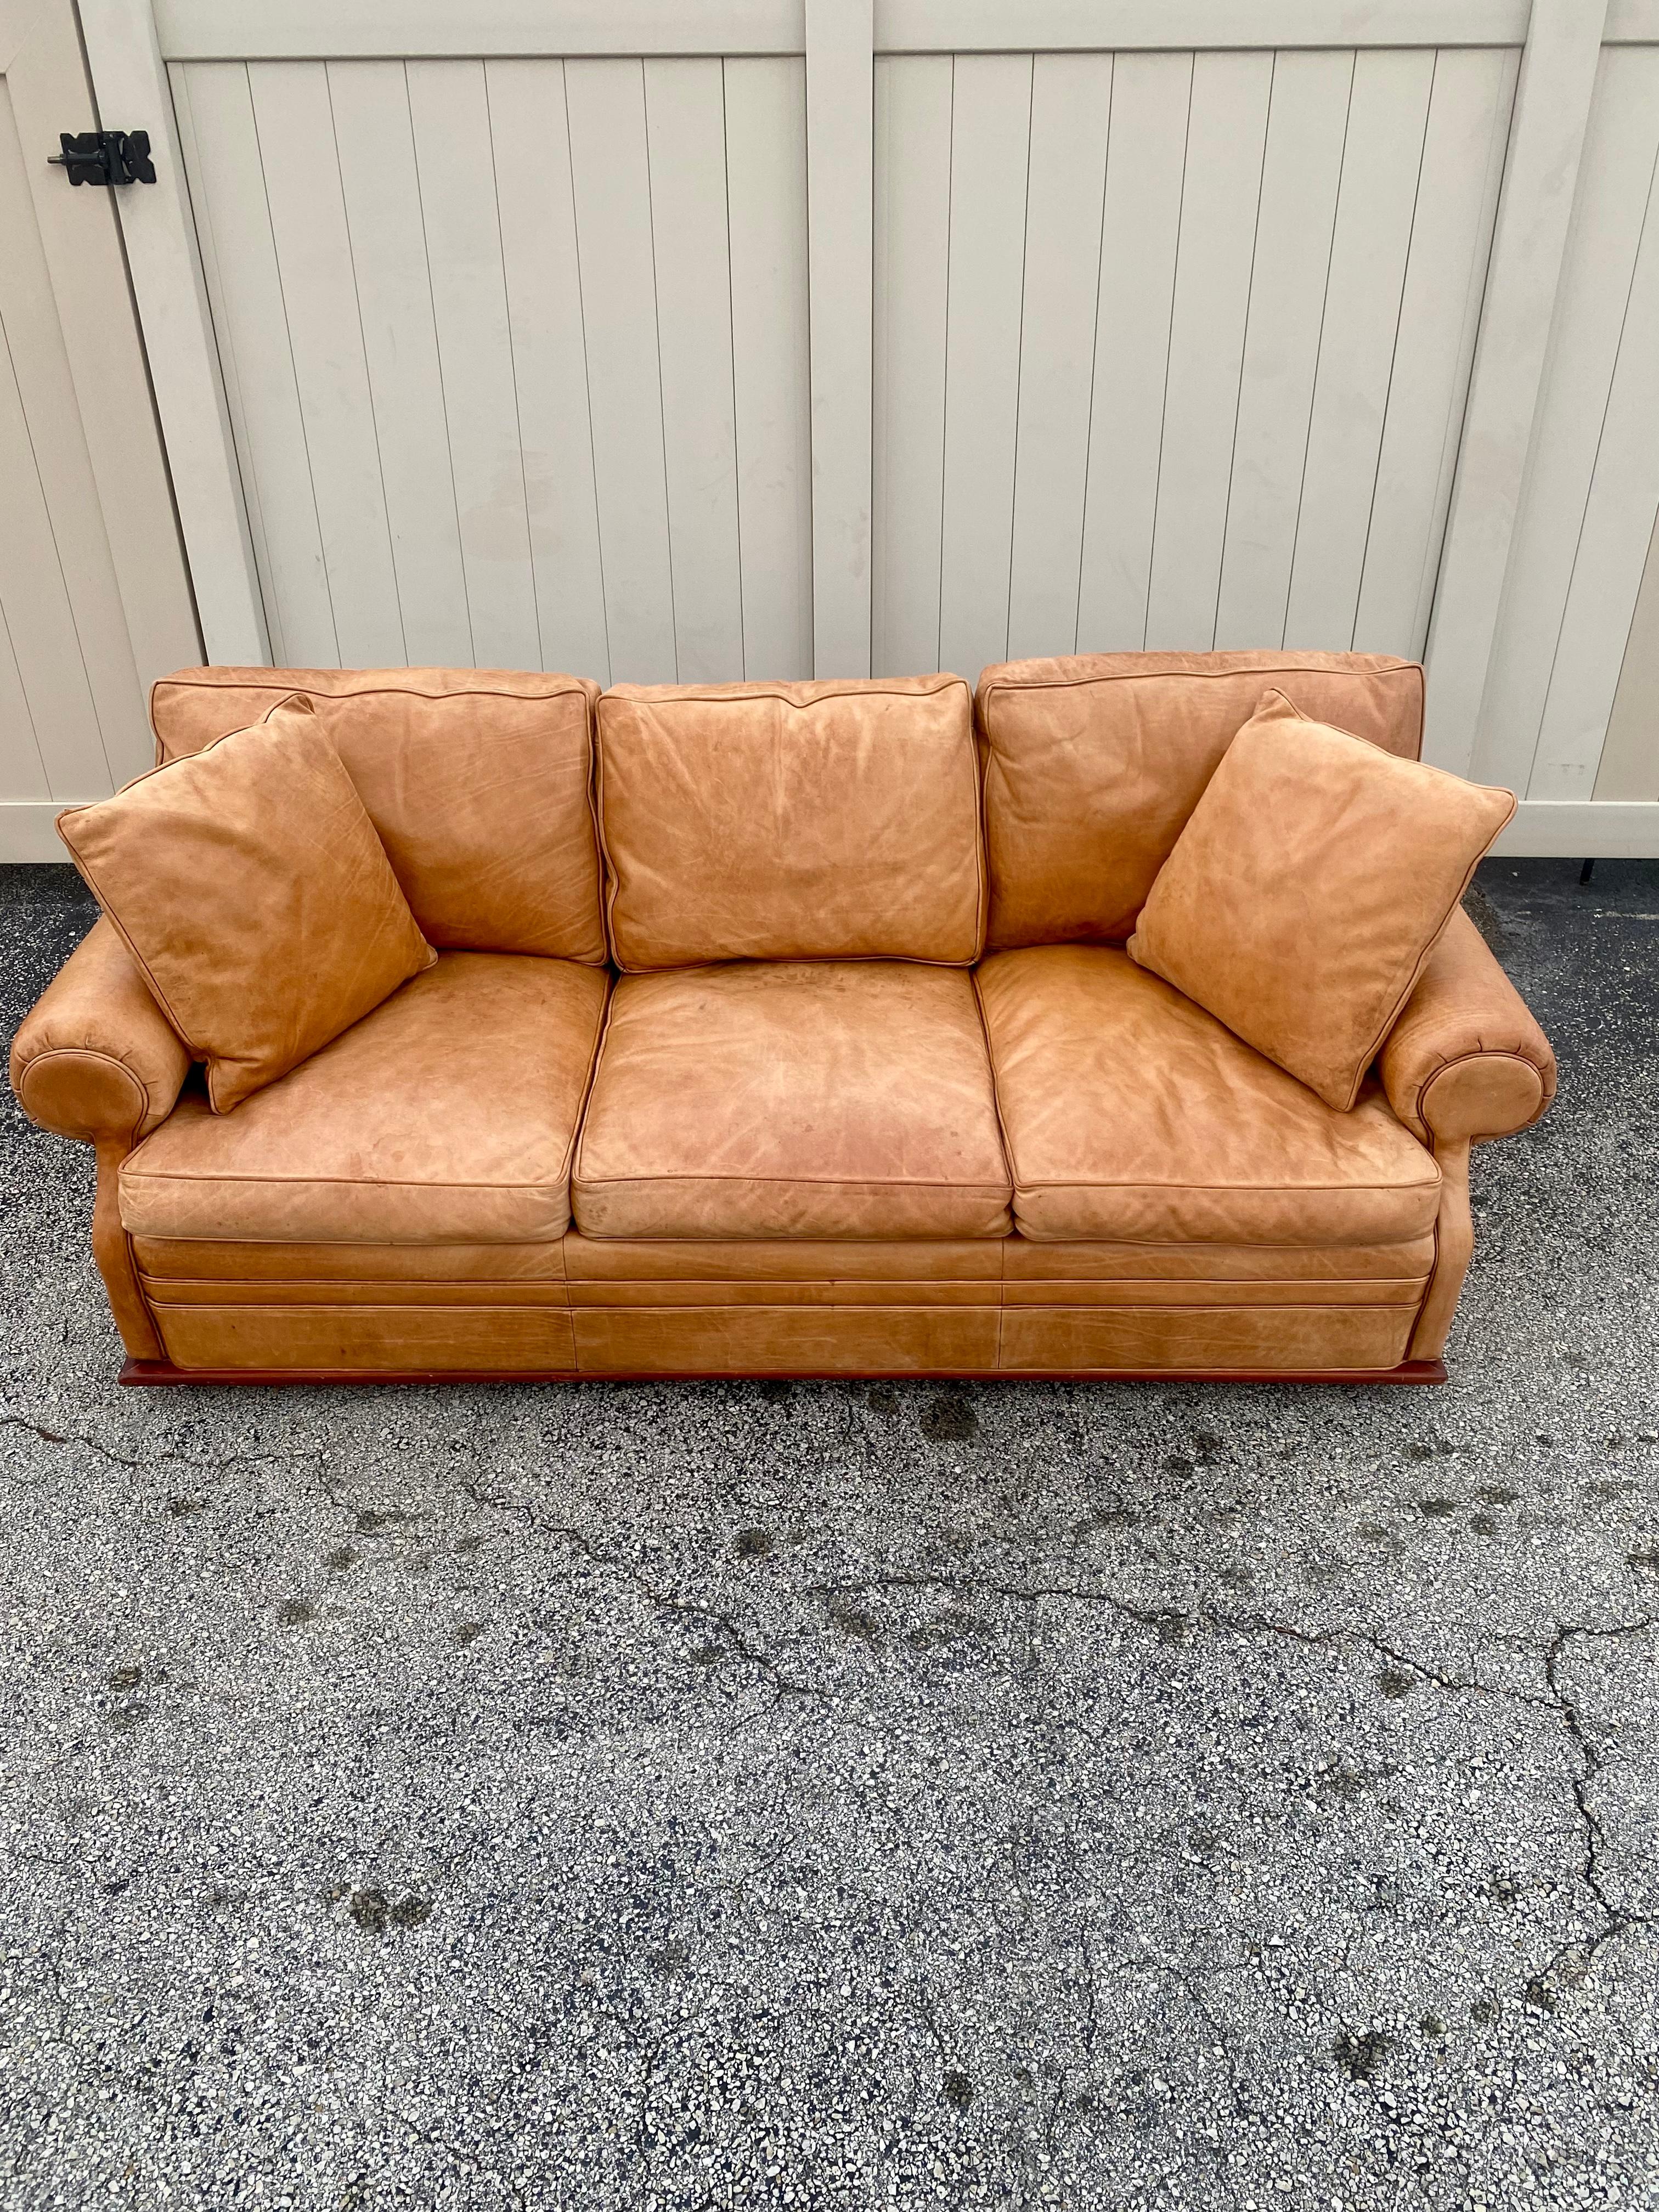 henredon leather sofa